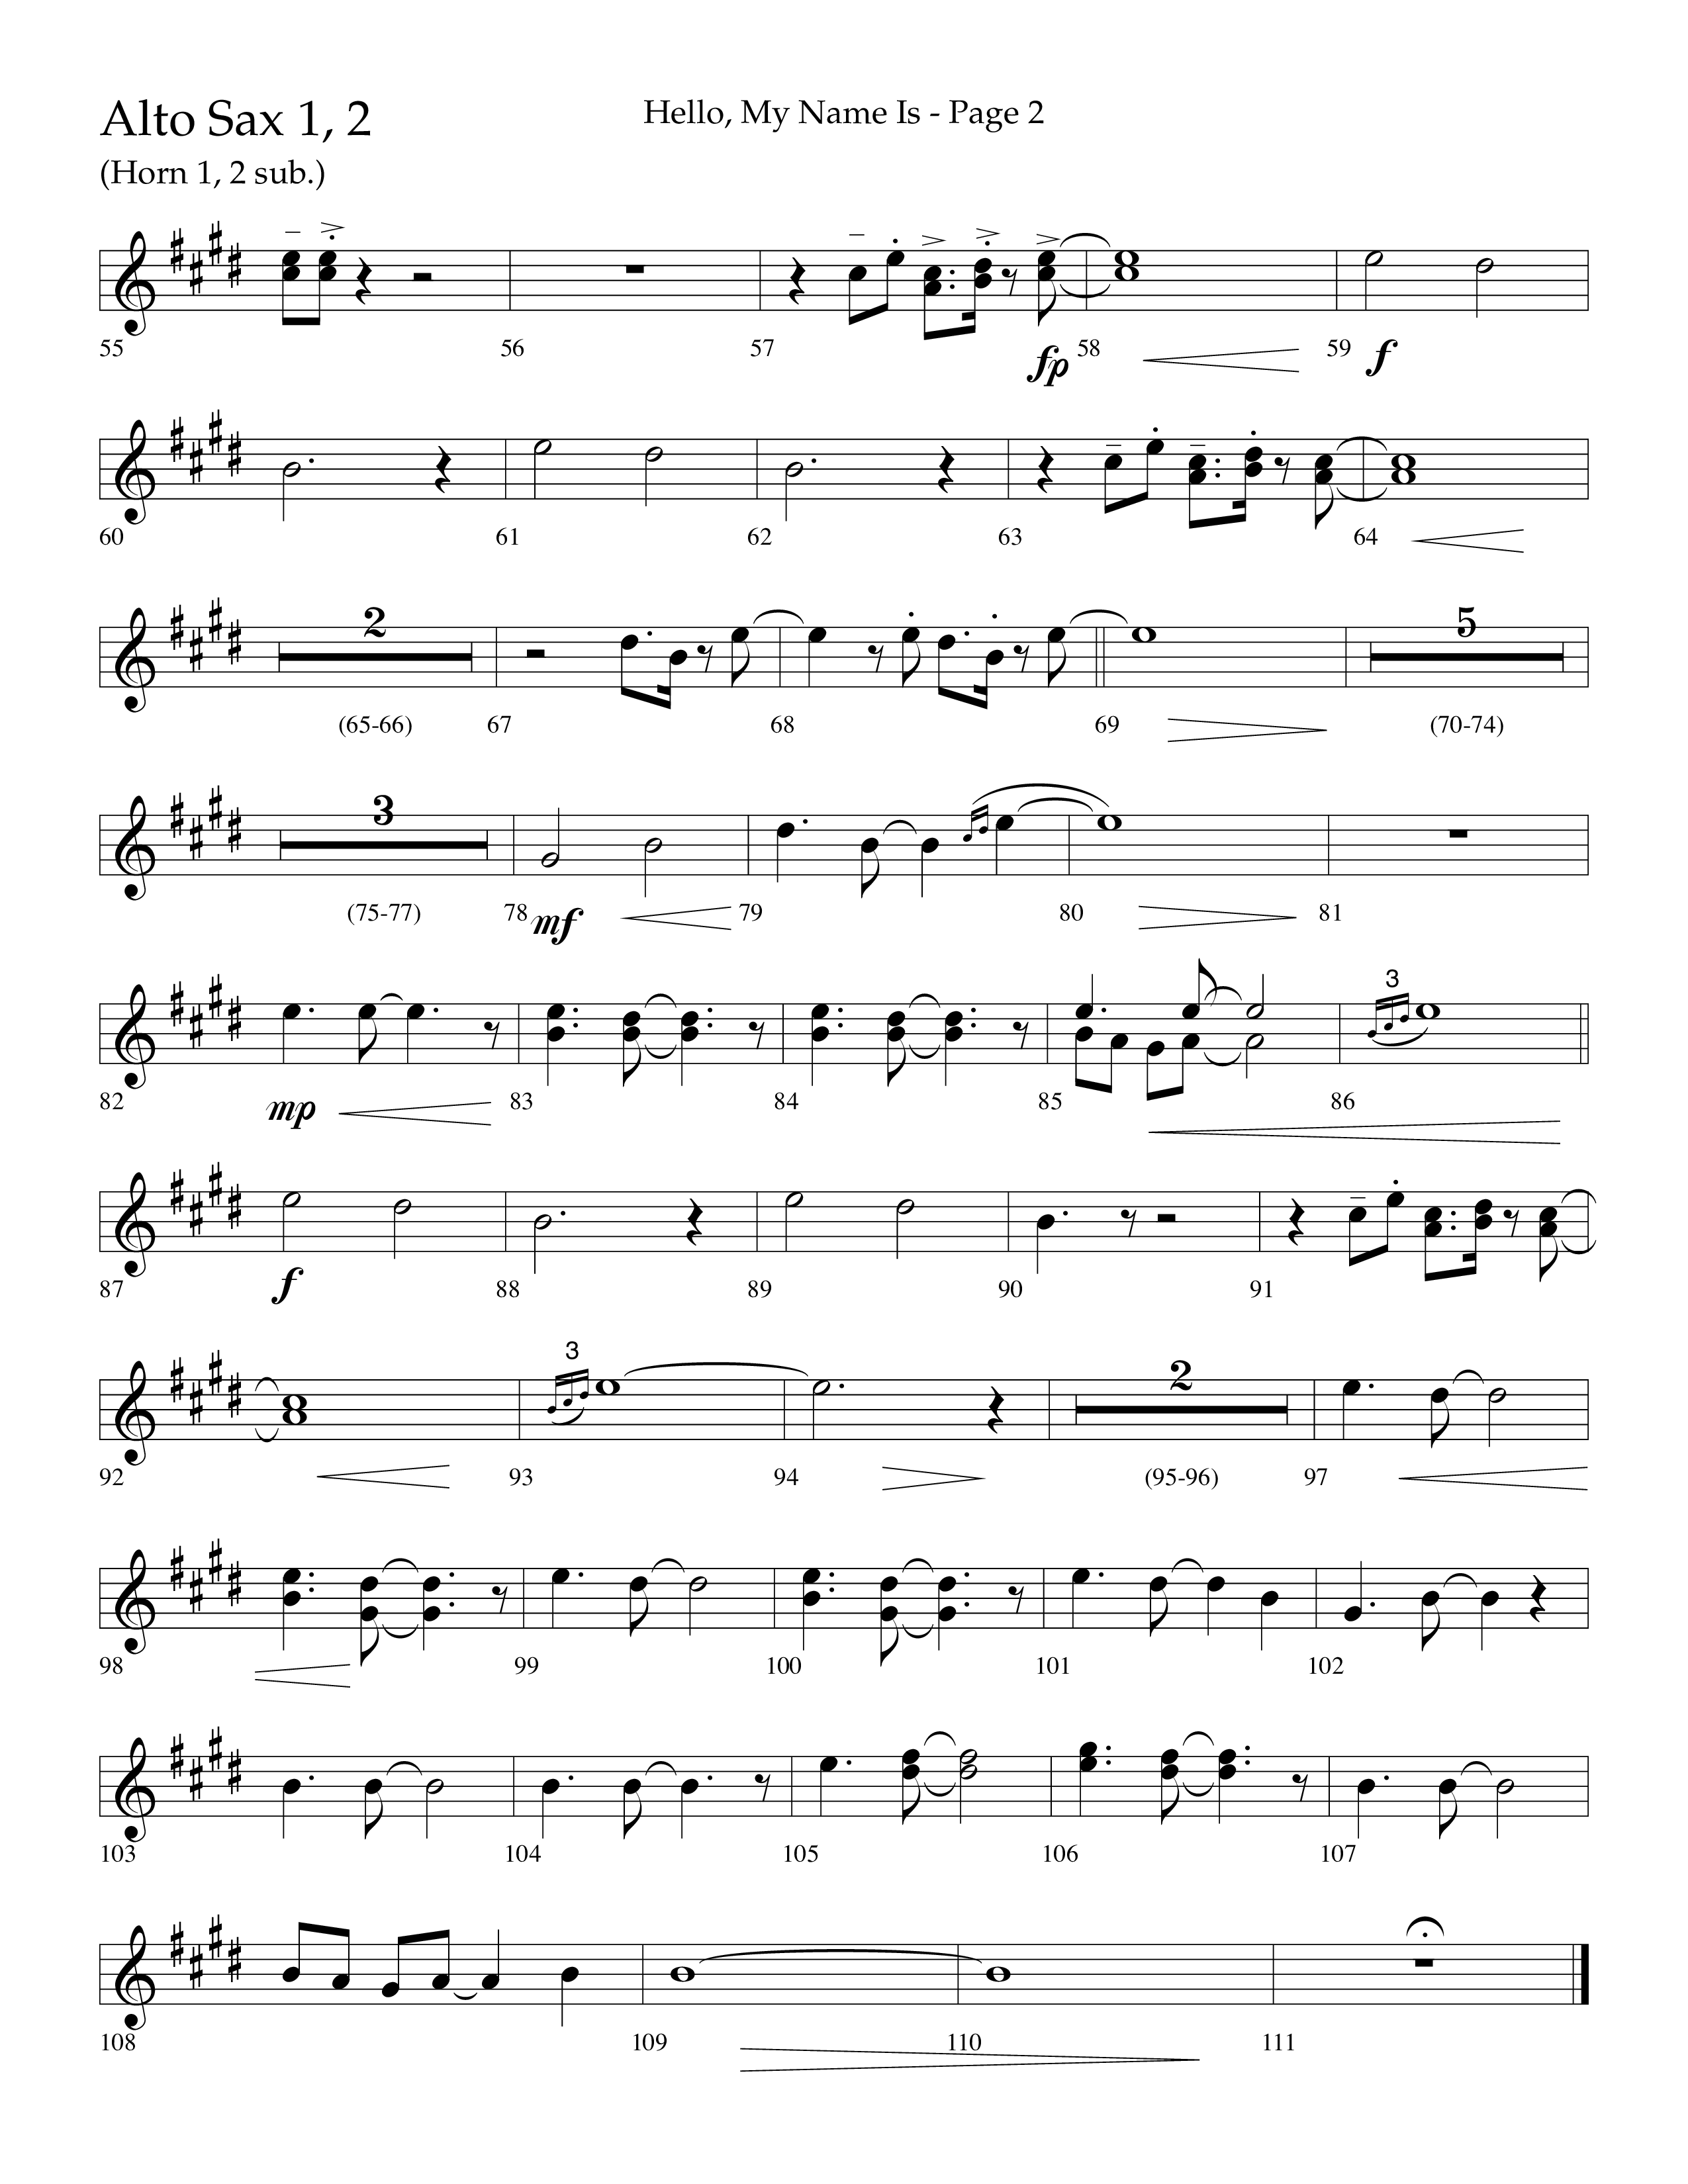 Hello My Name Is (Choral Anthem SATB) Alto Sax 1/2 (Lifeway Choral / Arr. Jim Hammerly)